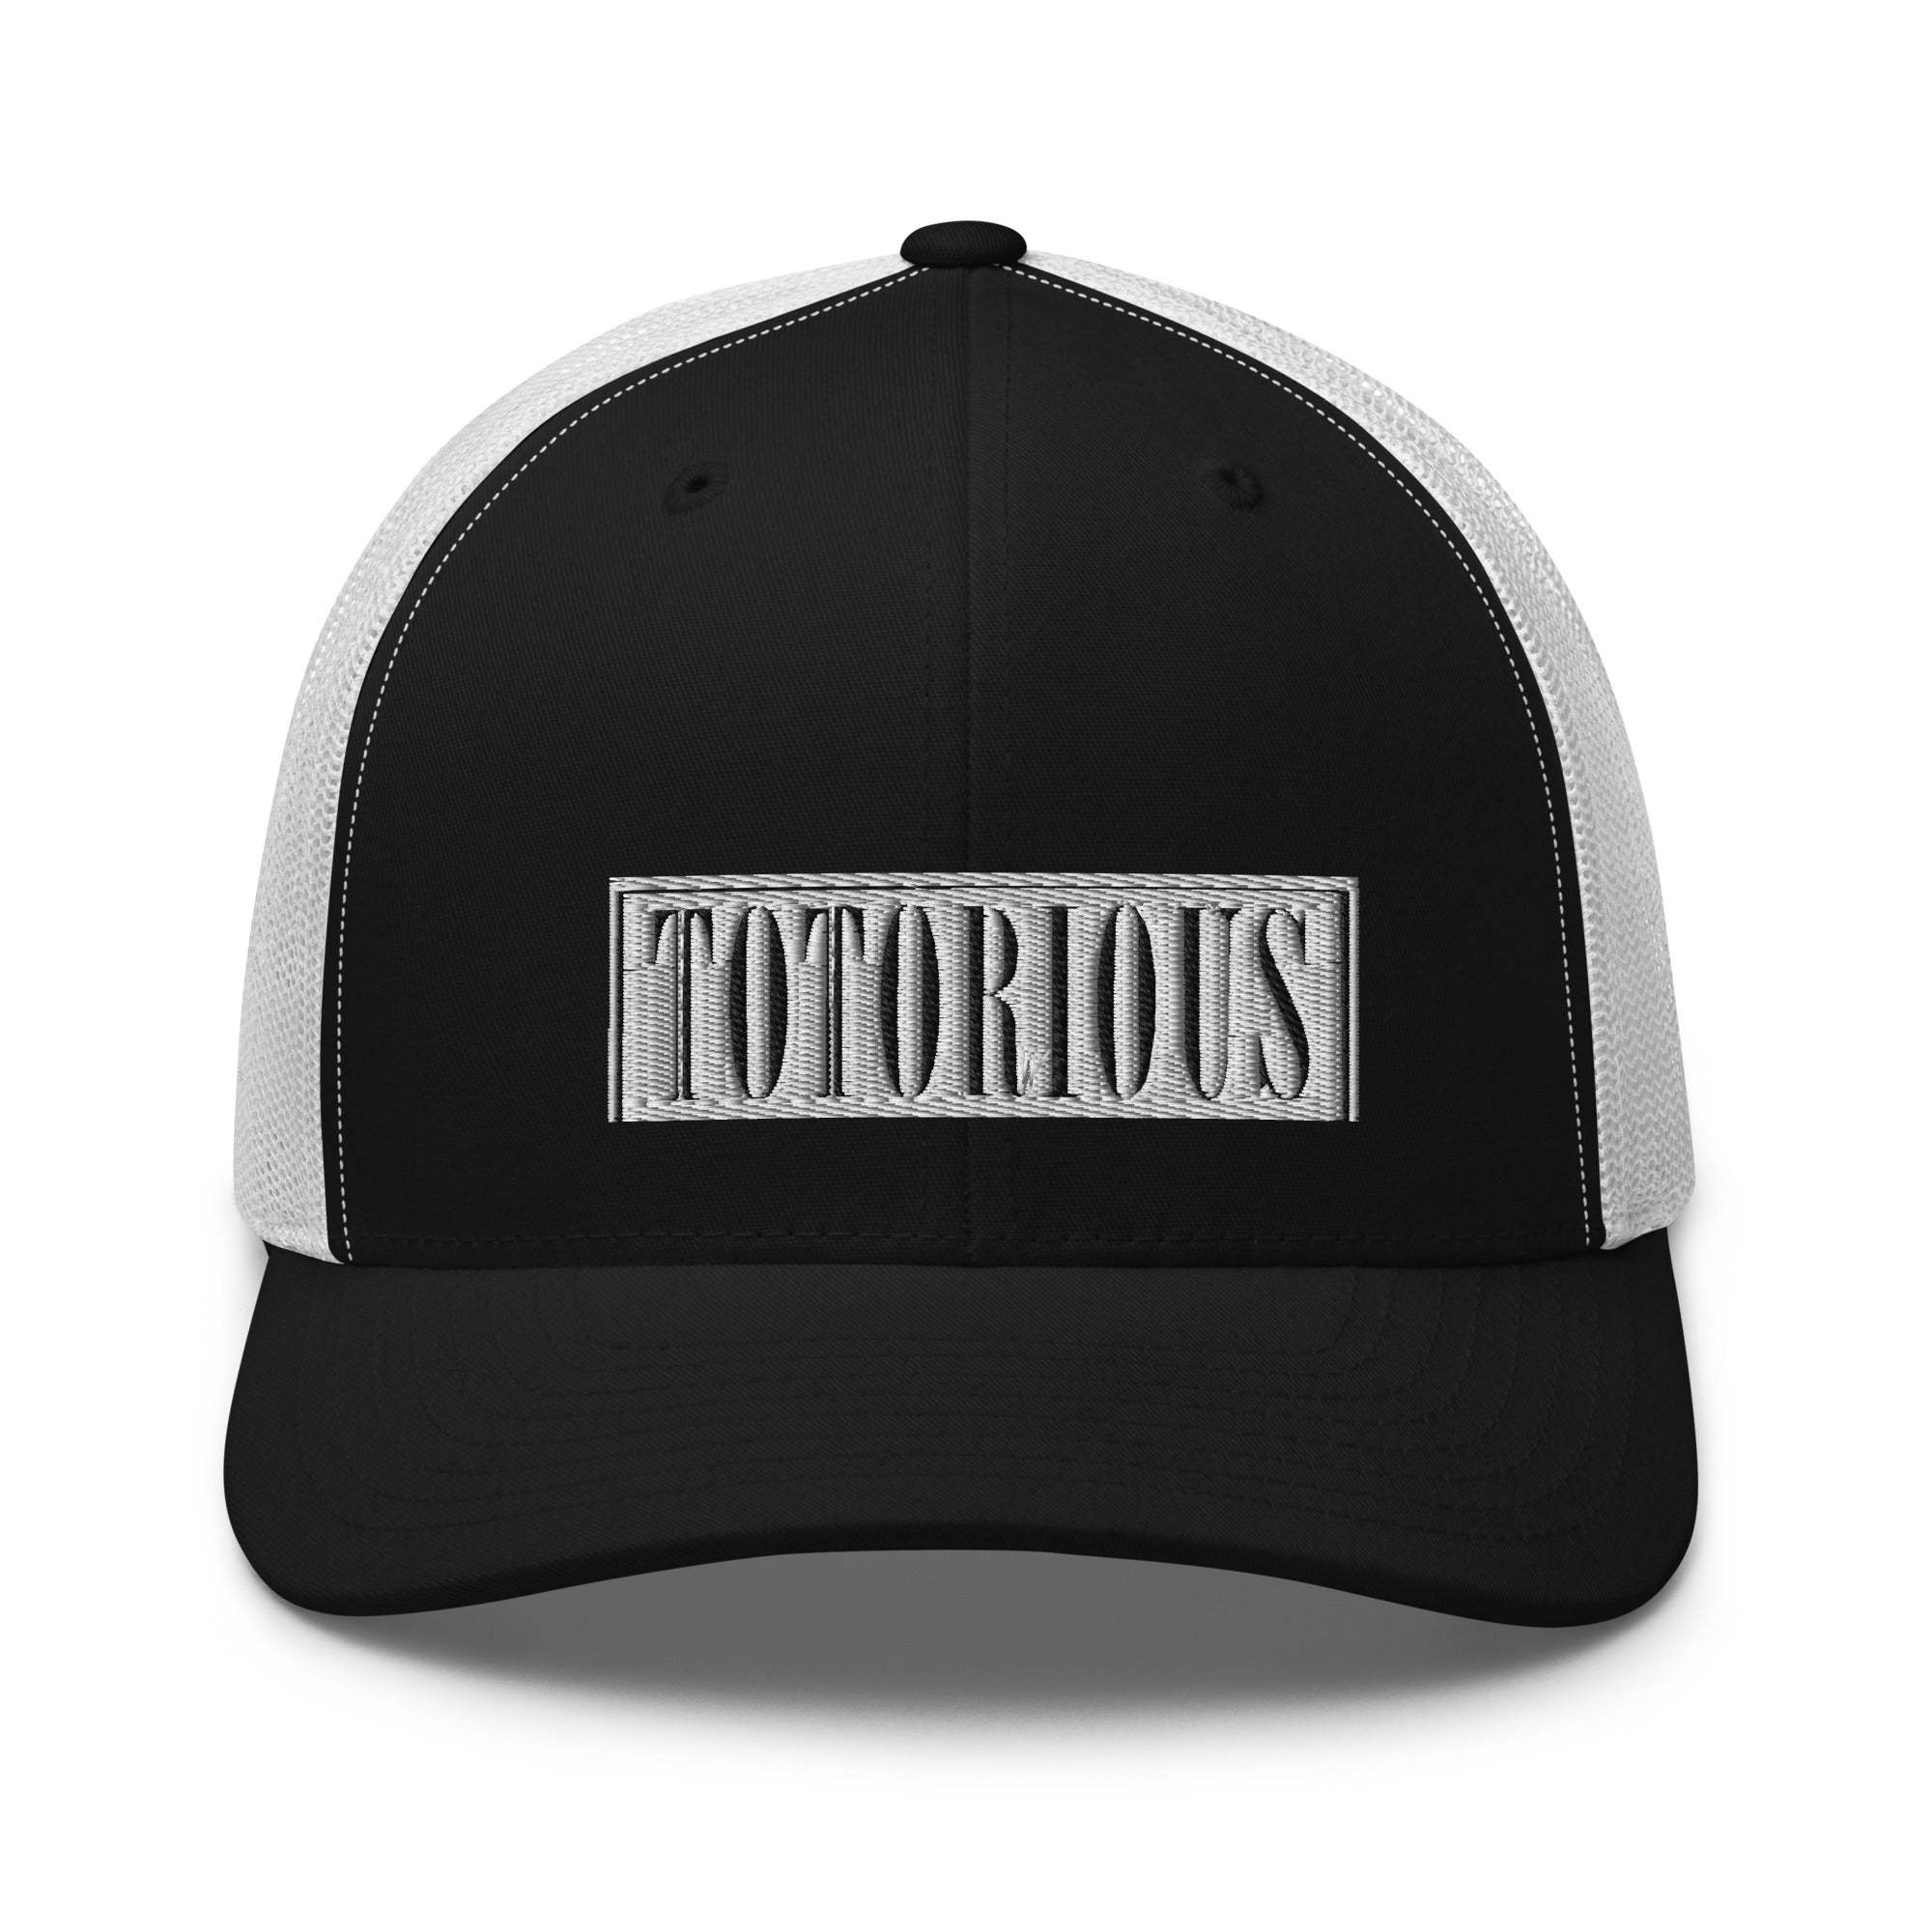 Totorious Trucker Cap